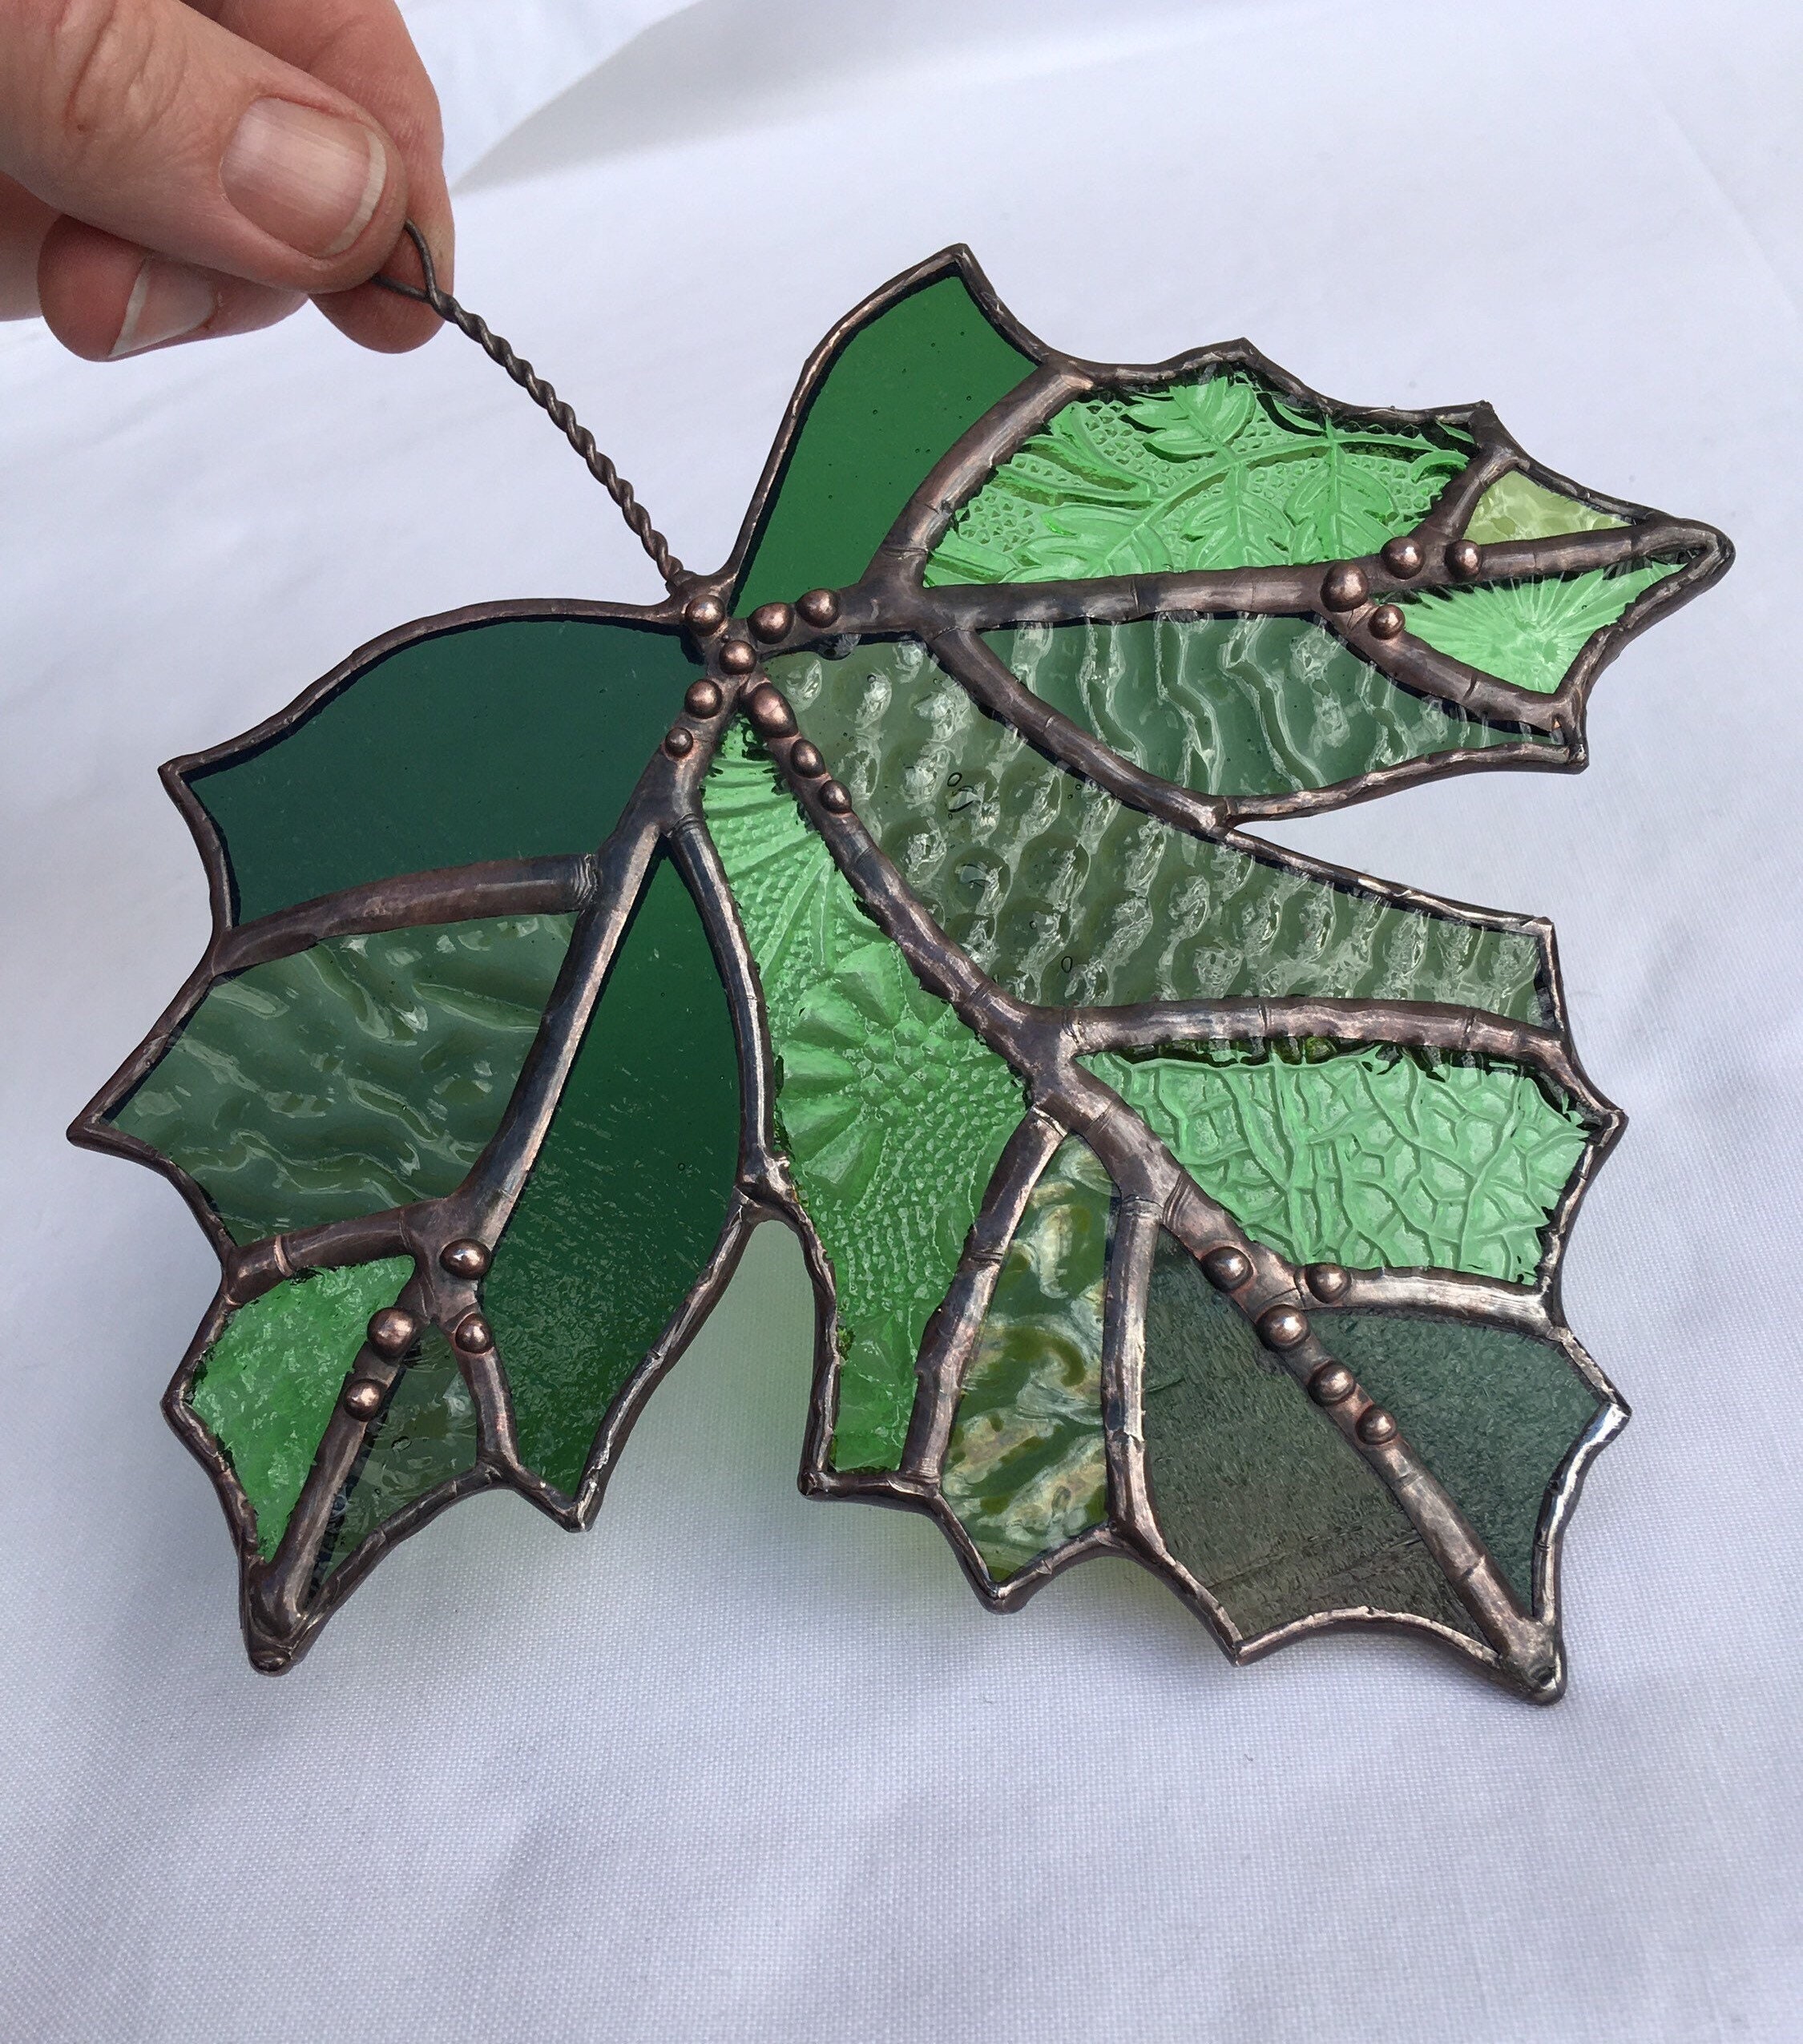 Leaf stained glass suncatcher